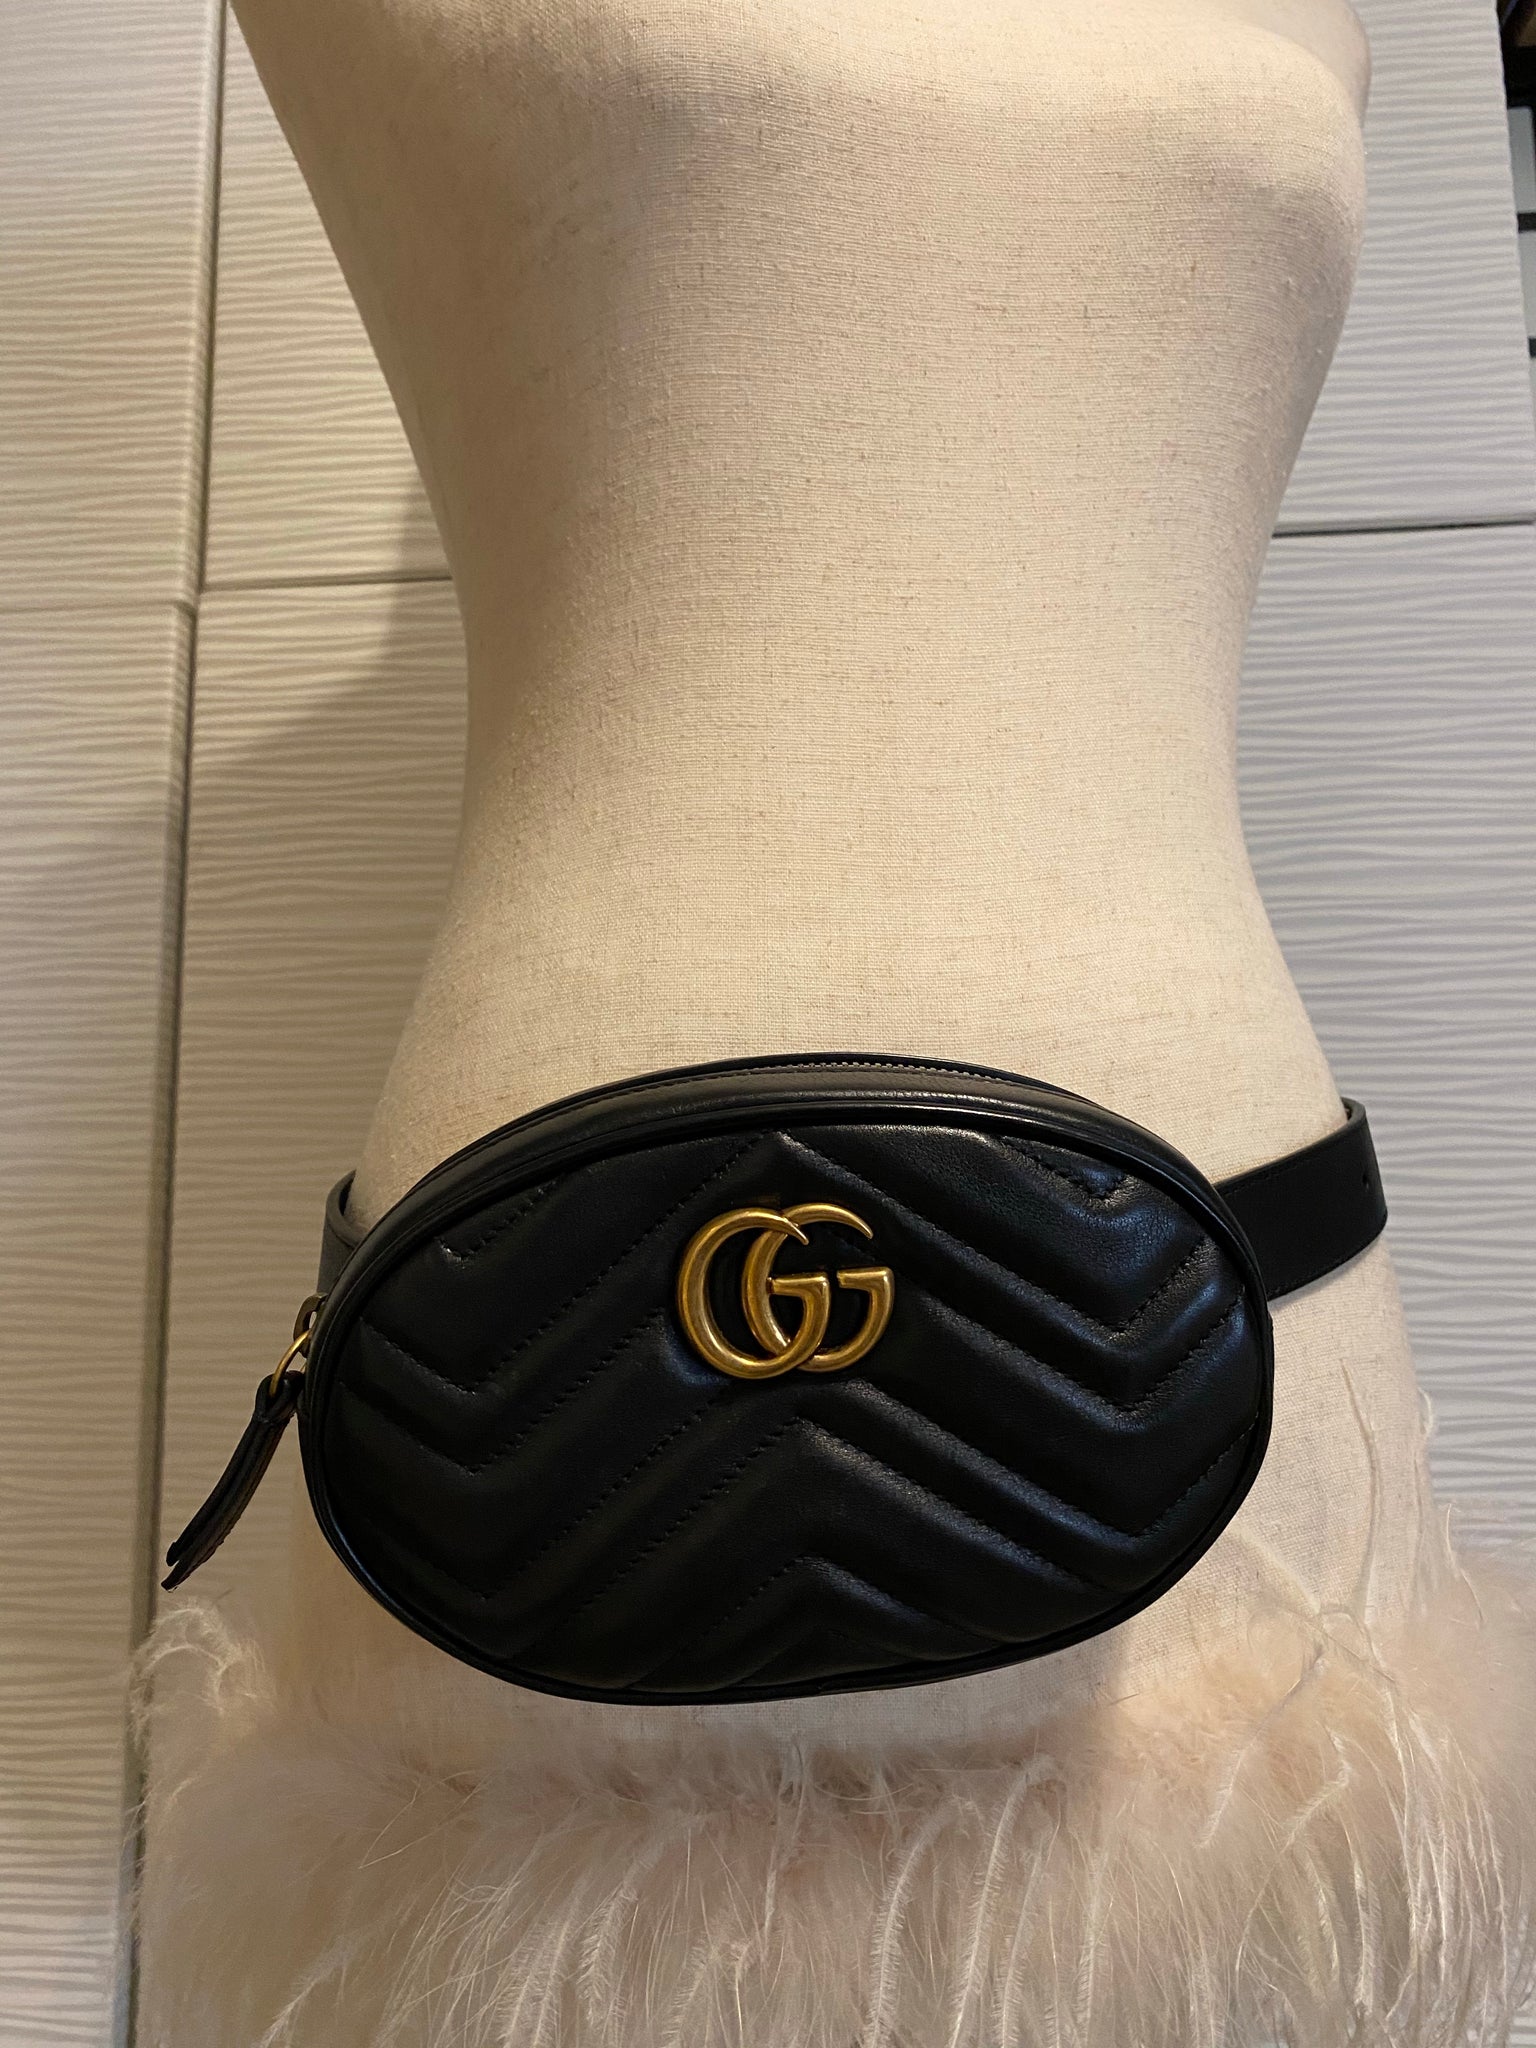 gucci belt bag size 85